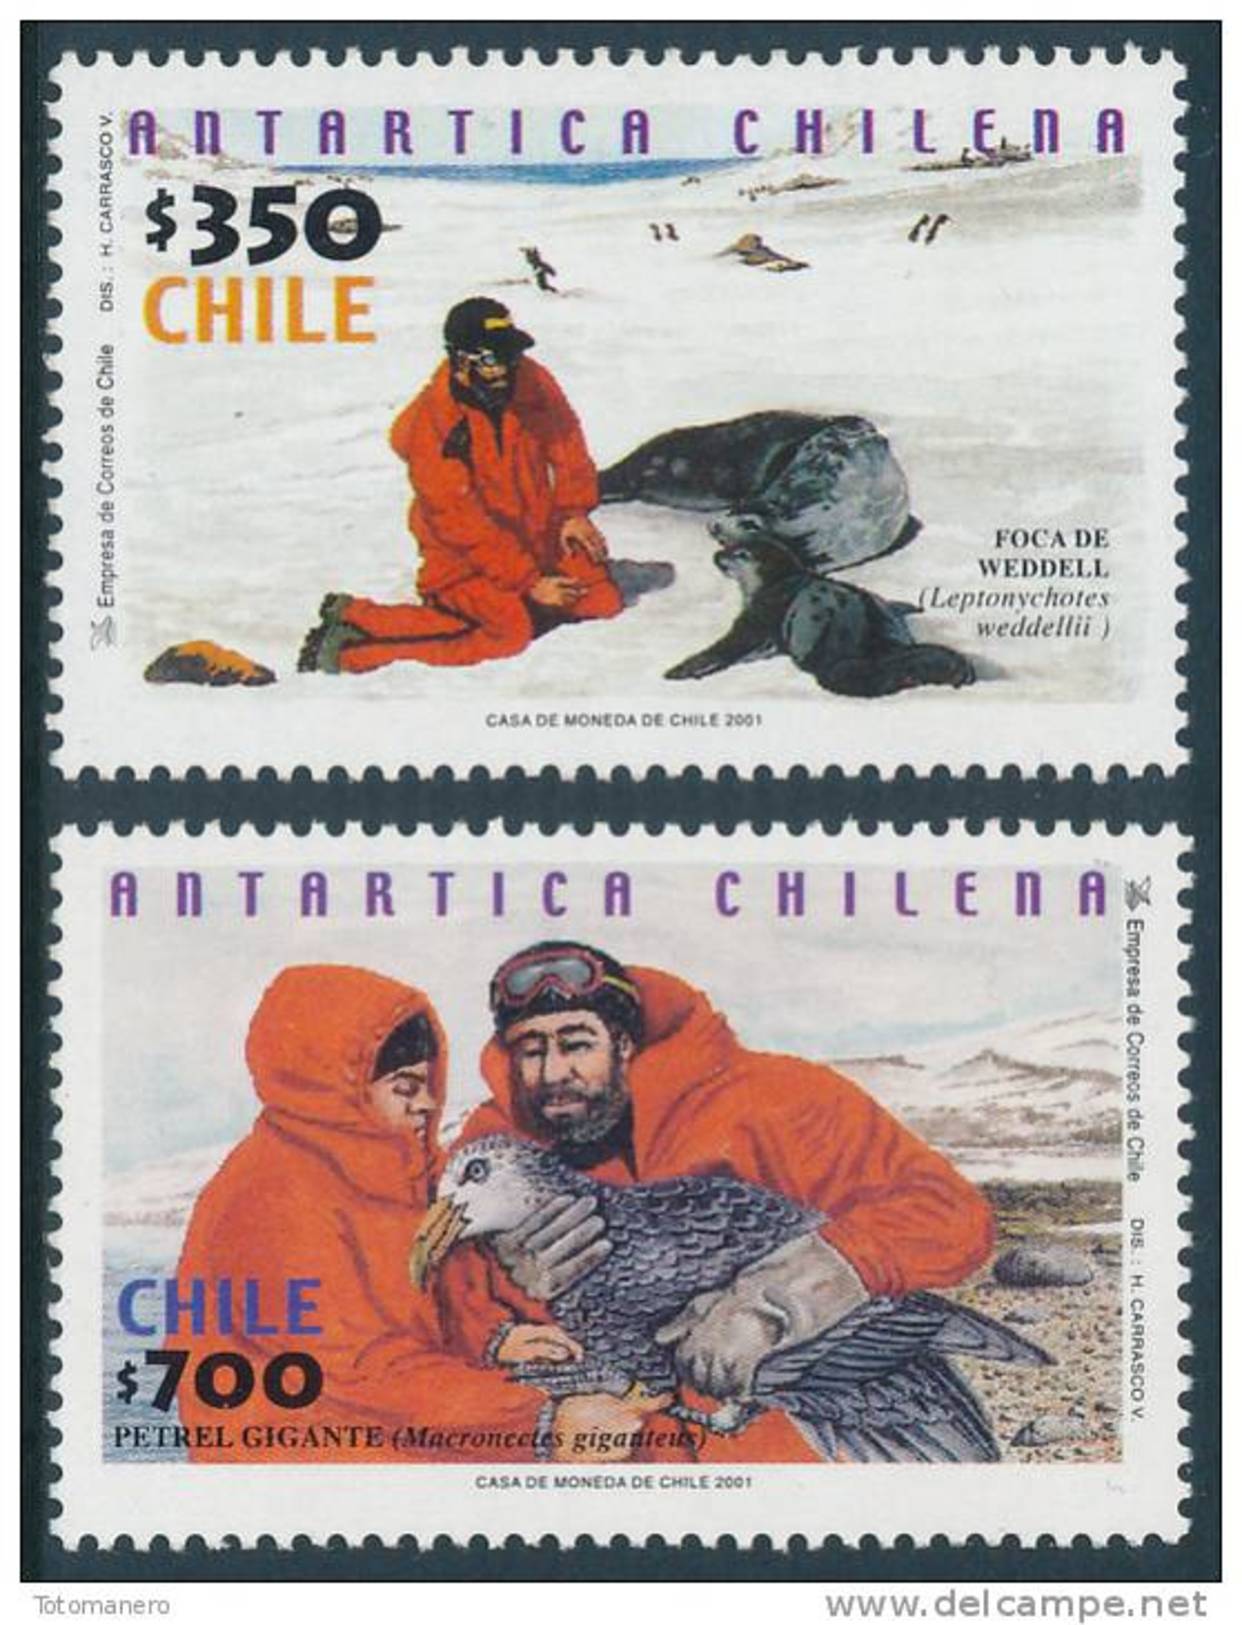 CHILE 2001 ANTARTICA CHILENA Foca De Weddel & Petrel Gigante Set Of 2v** - Faune Antarctique